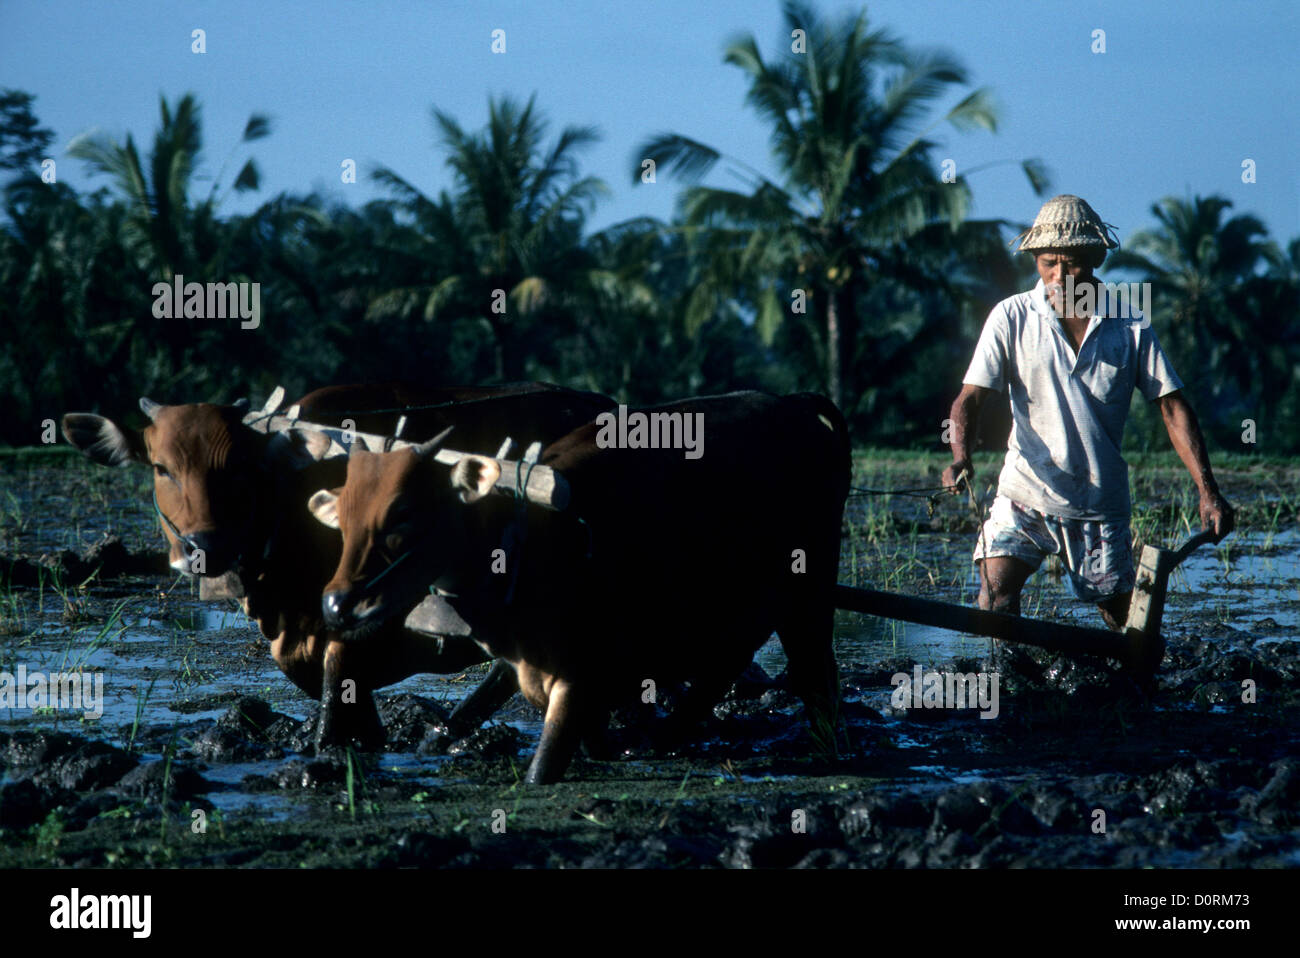 Indonesia, farmer furrowing field with bulls. Stock Photo